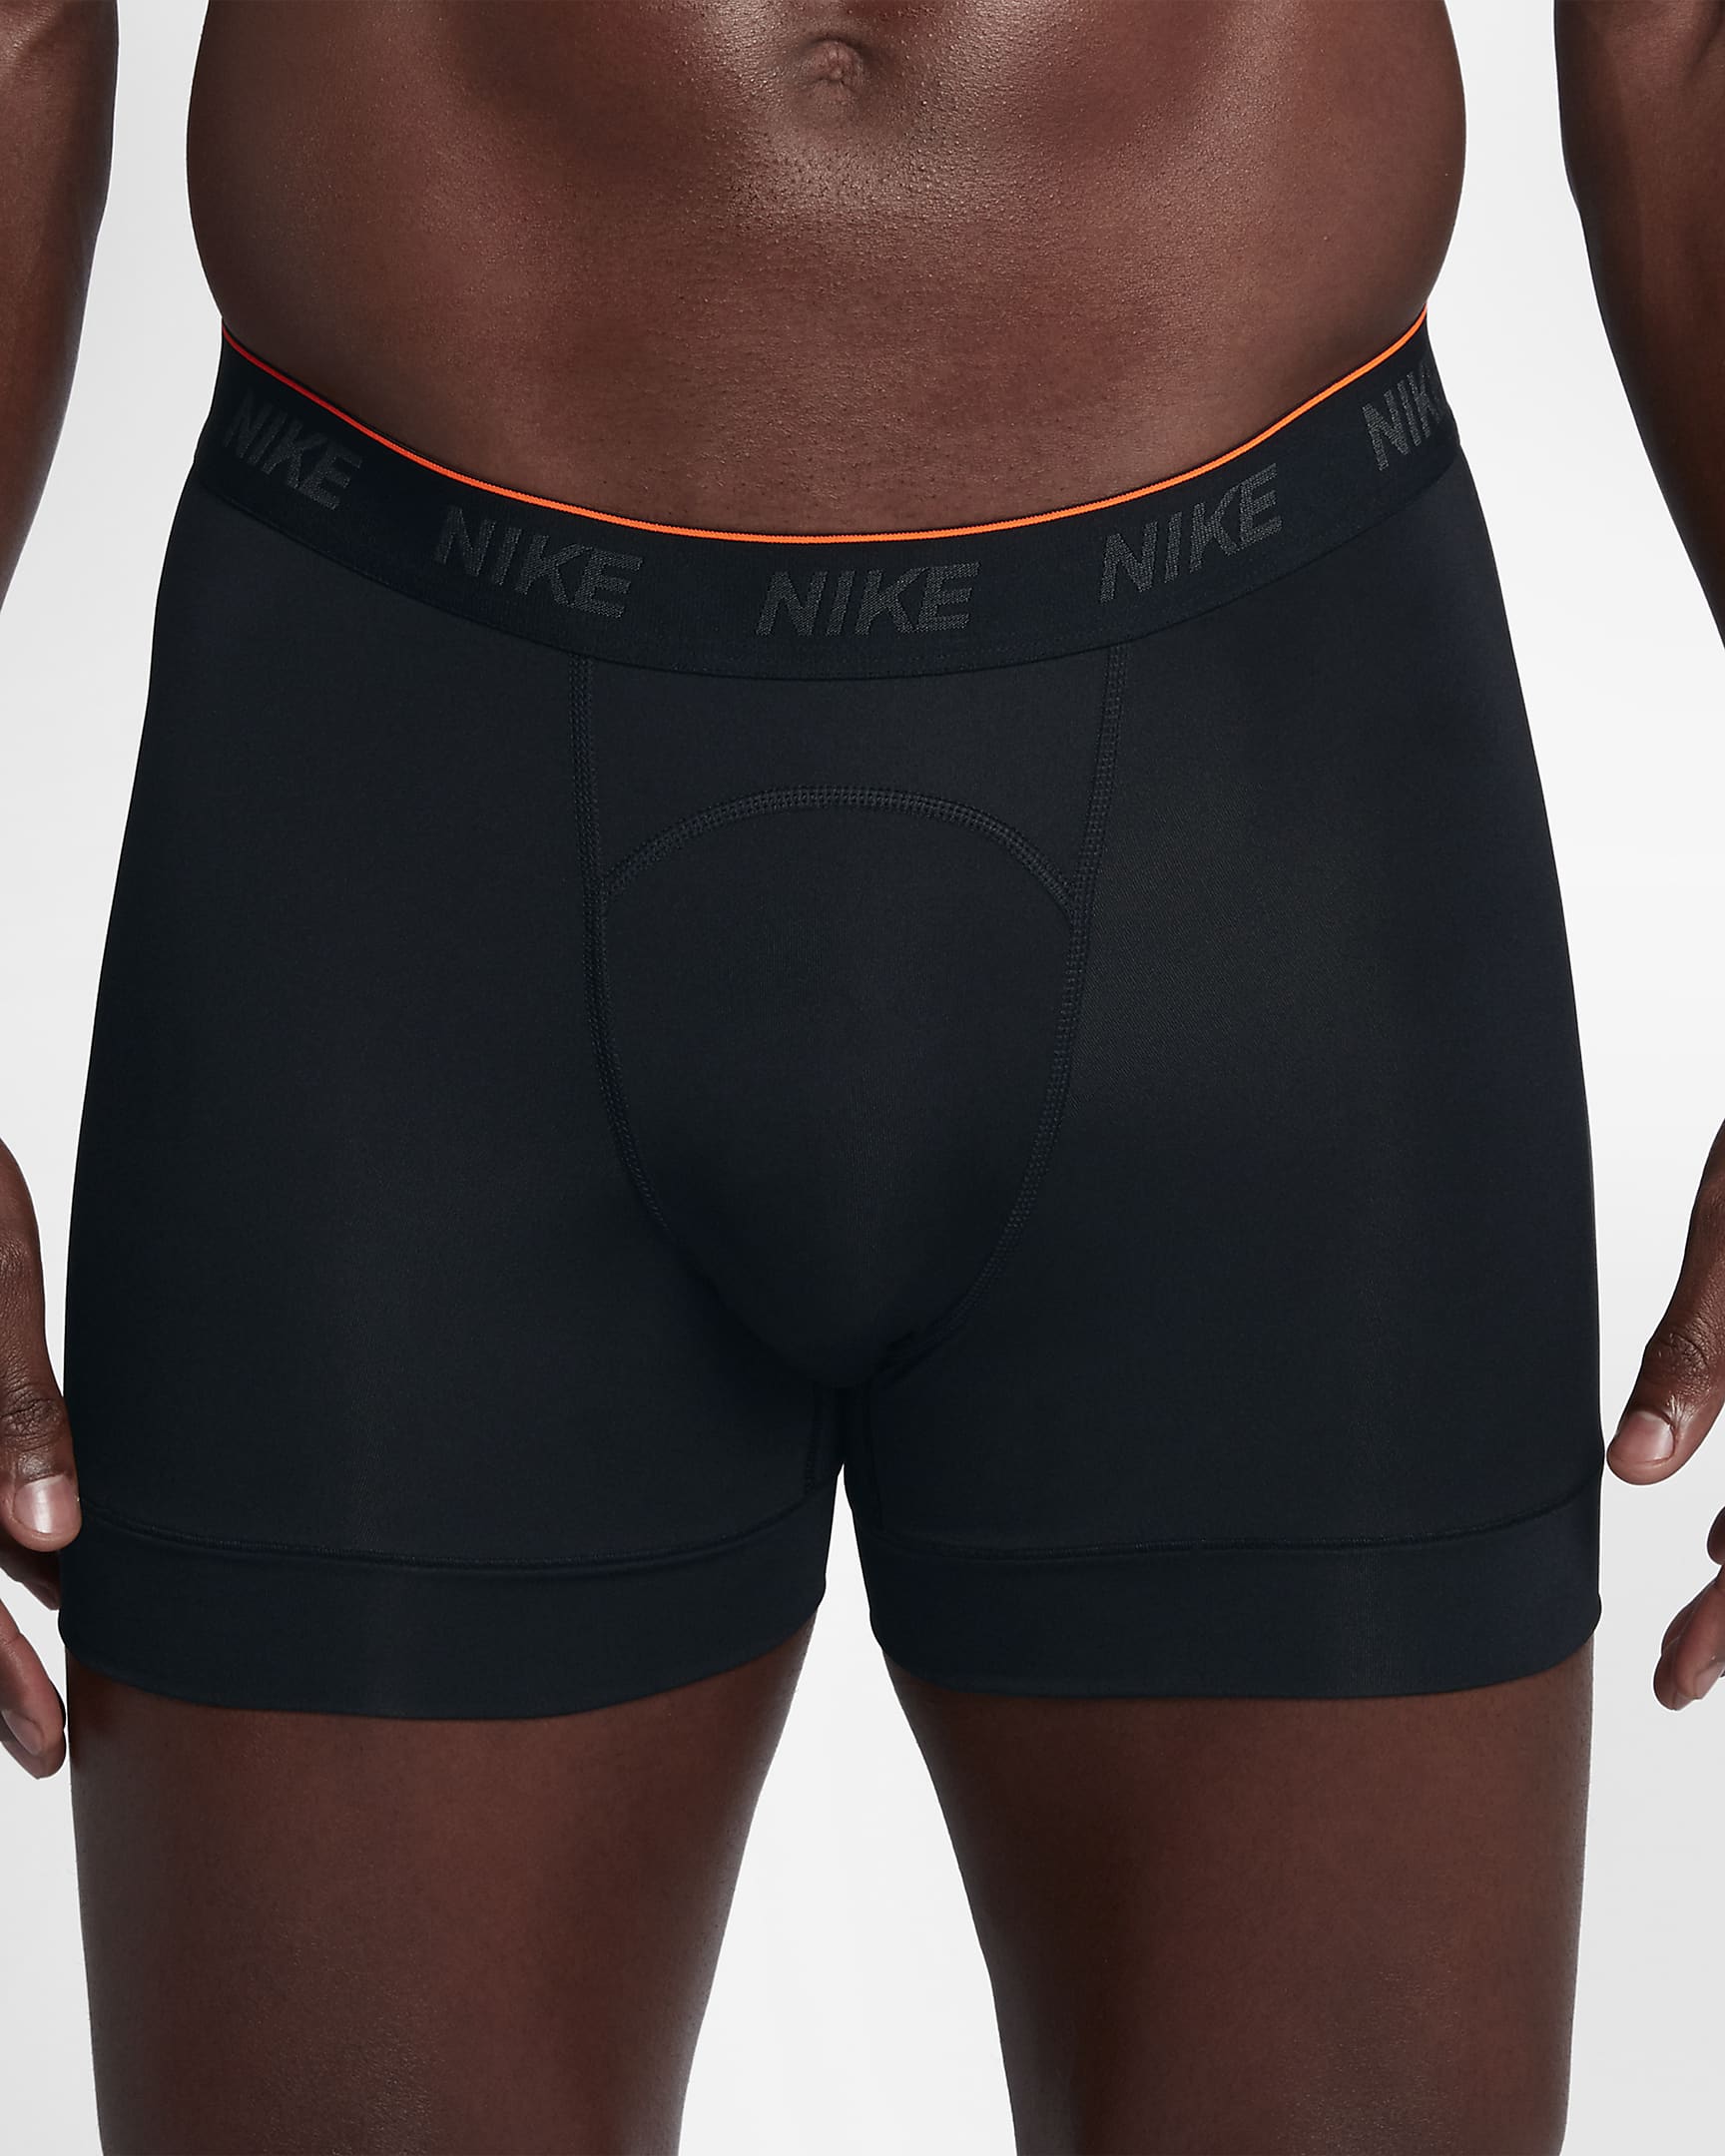 Nike Men's Underwear (2 Pairs) - Black/Black/White